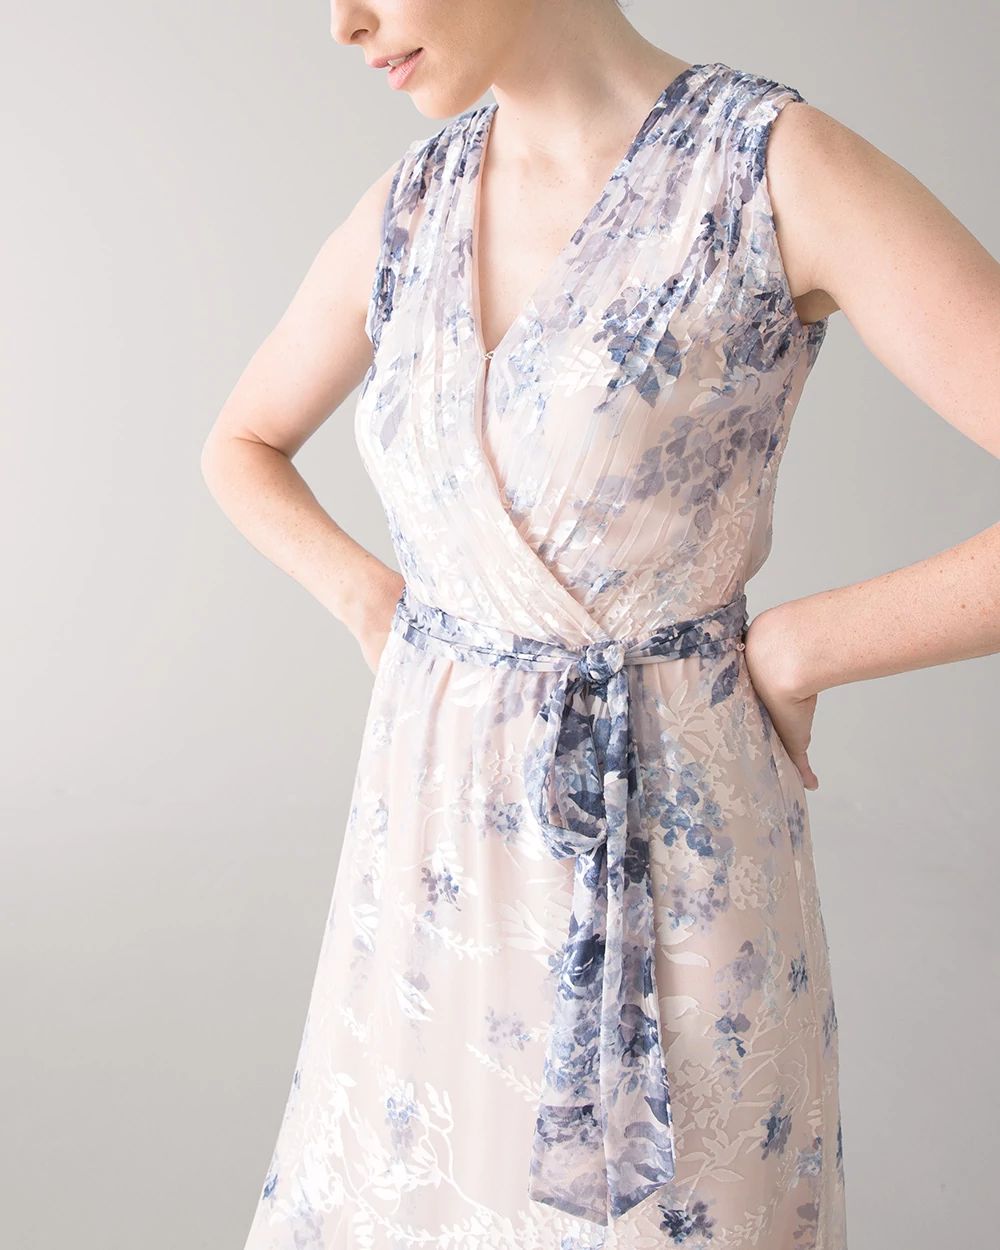 Sleeveless Burnout Godet Midi-Dress click to view larger image.